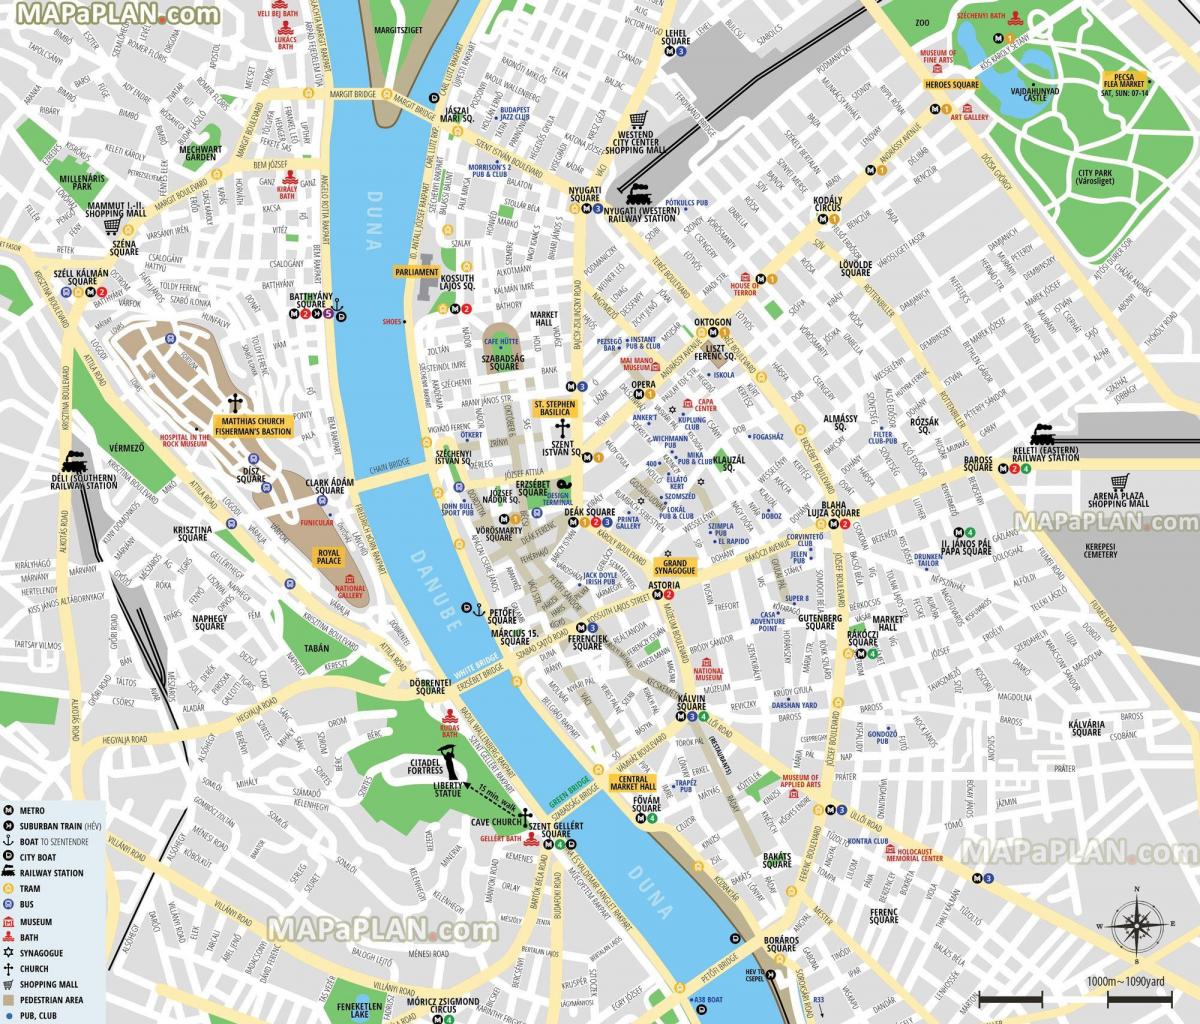 Budapest city center map